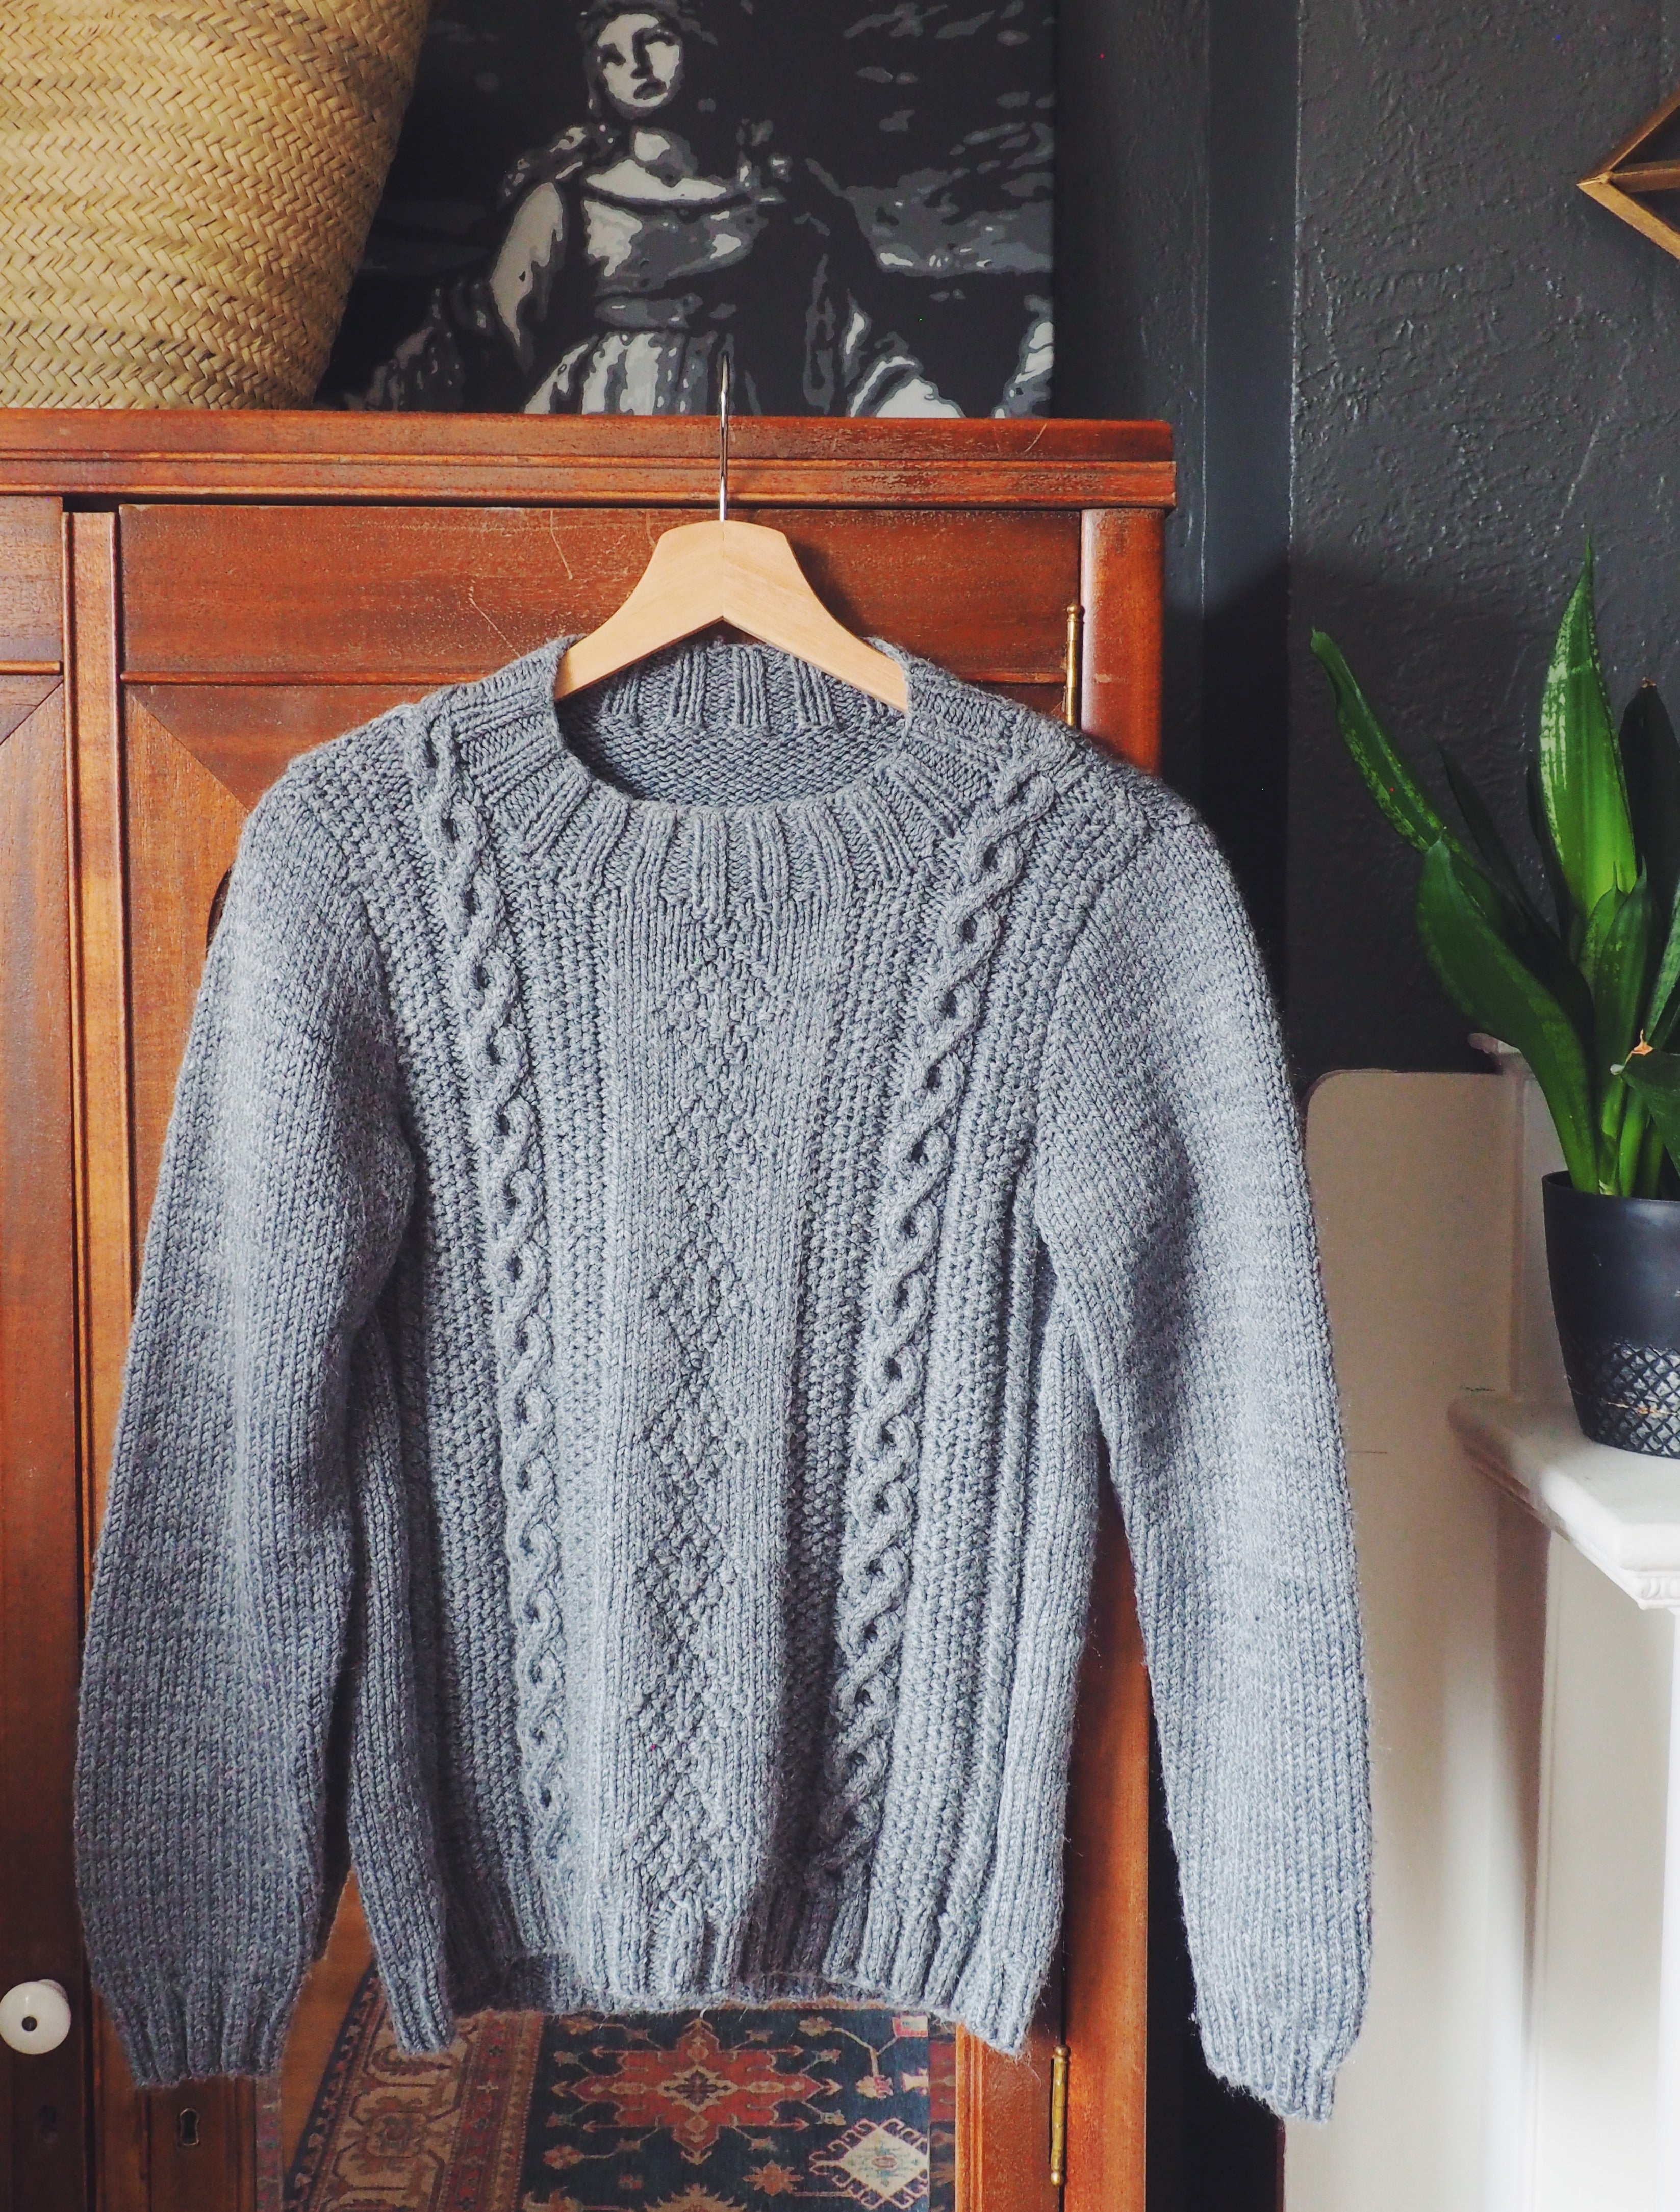 The Frankie Shop Devi Cable-Knit Mock Neck Sweater